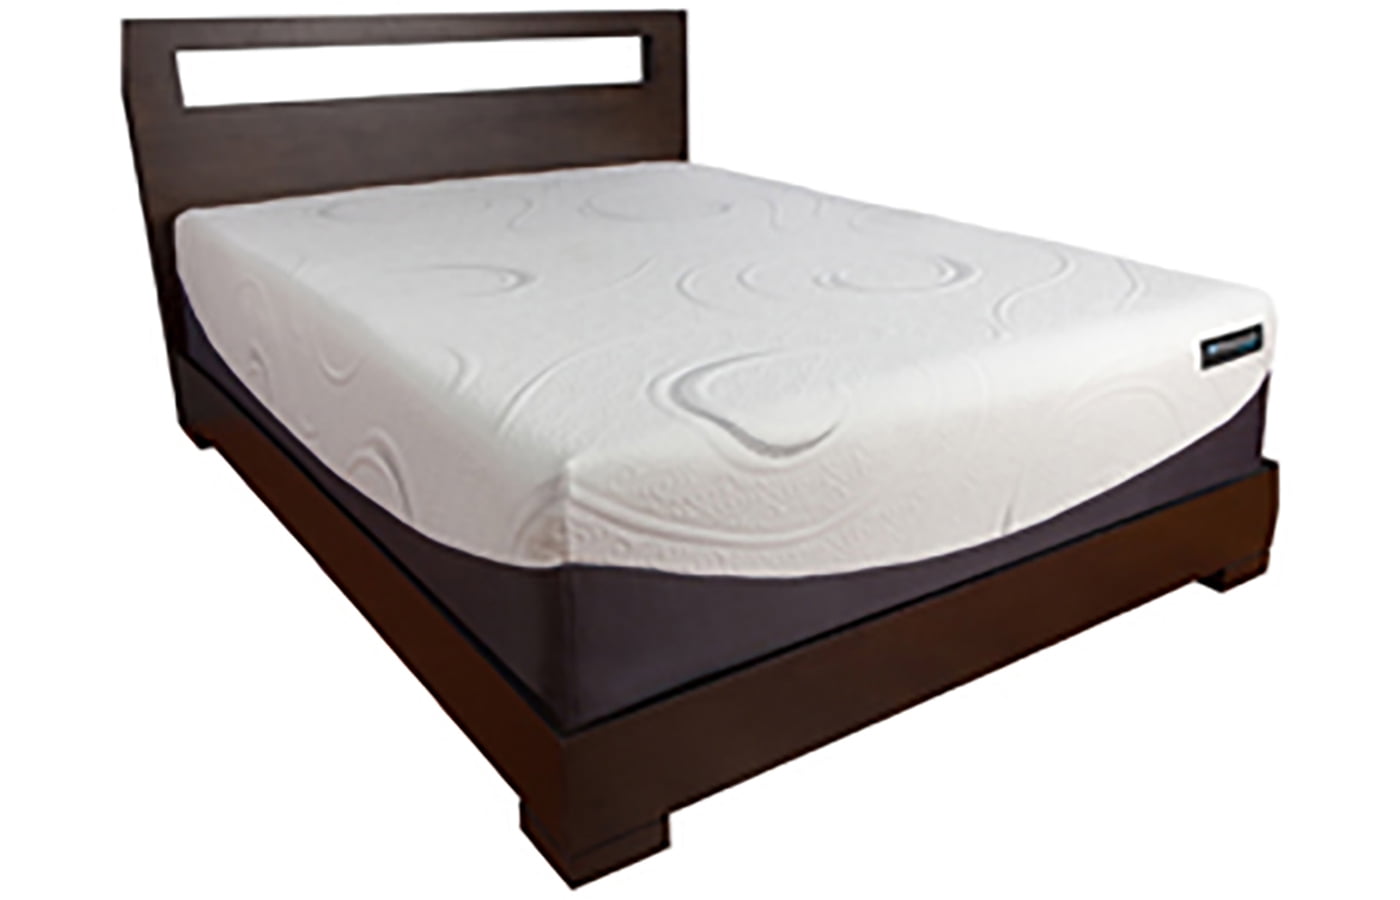 plush or ultra plush mattress